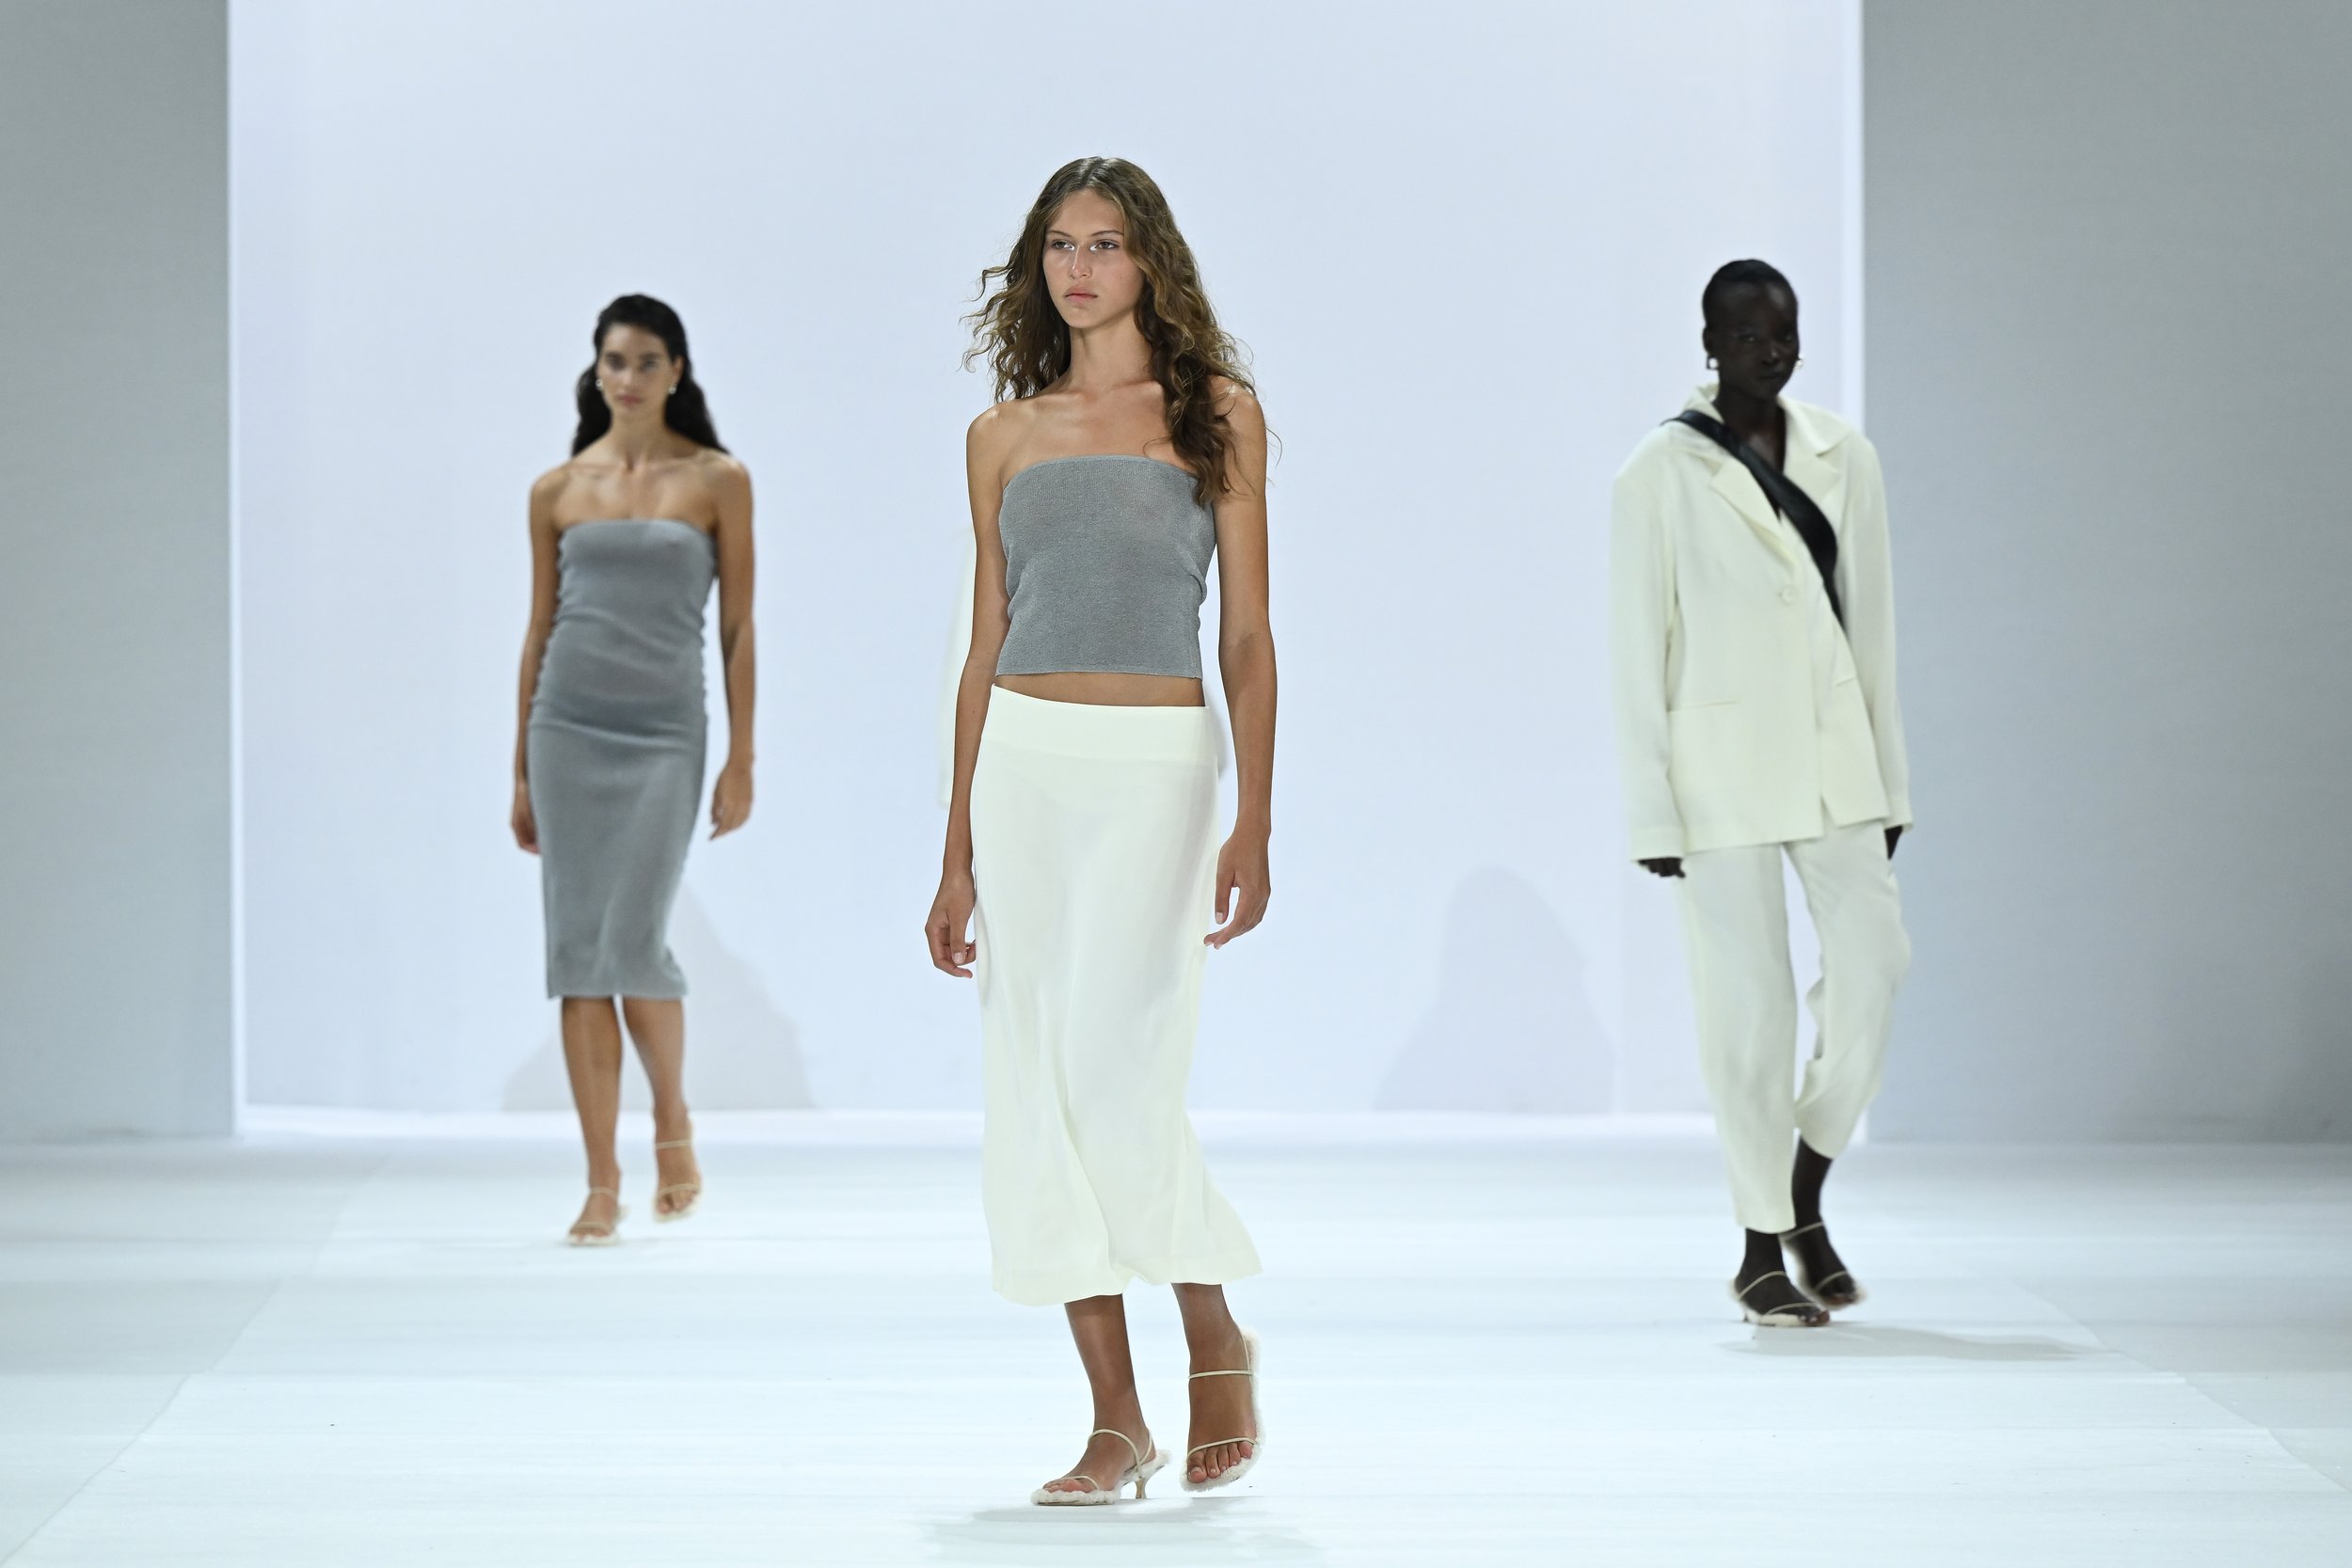 Fashion week runway show featuring three models